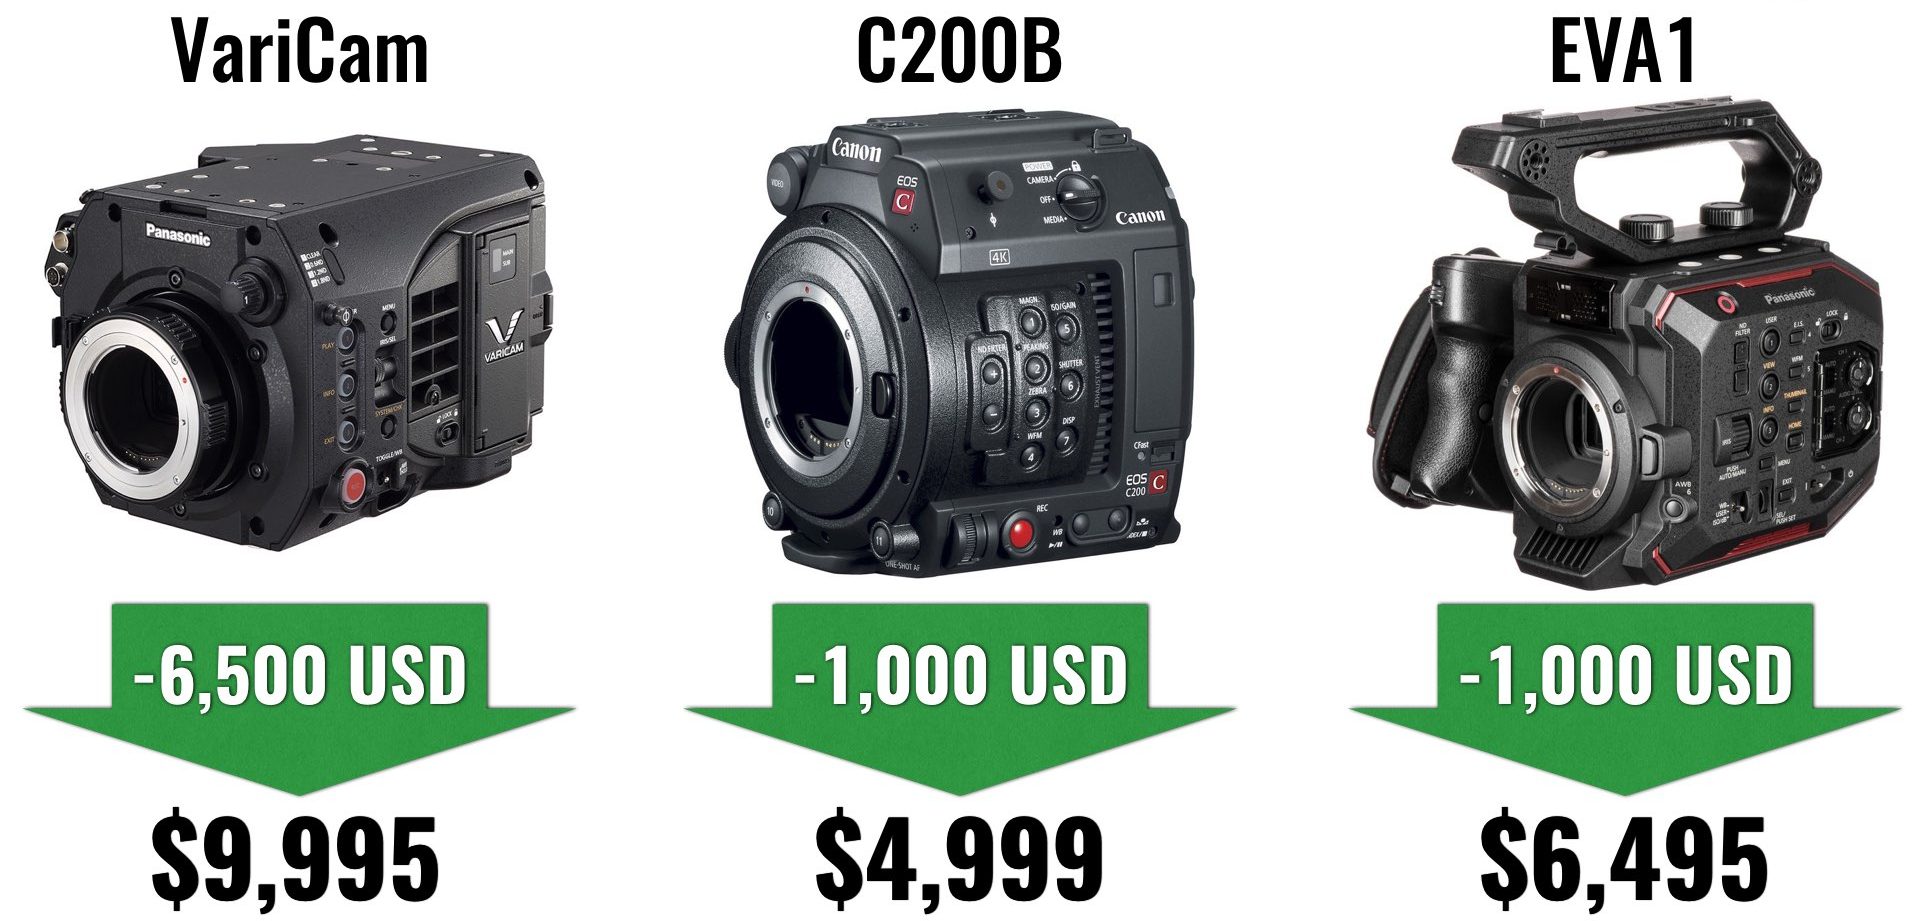 2019’s Cinema Cameras Price Drops